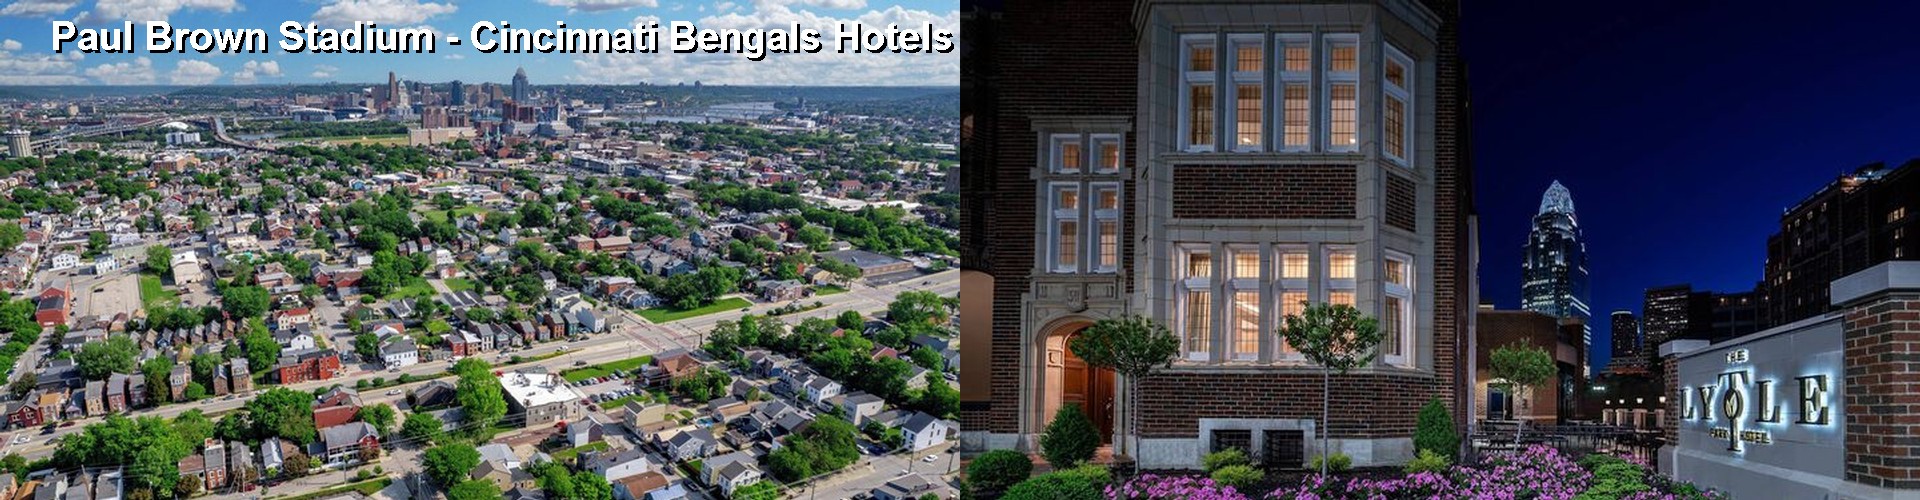 5 Best Hotels near Paul Brown Stadium - Cincinnati Bengals